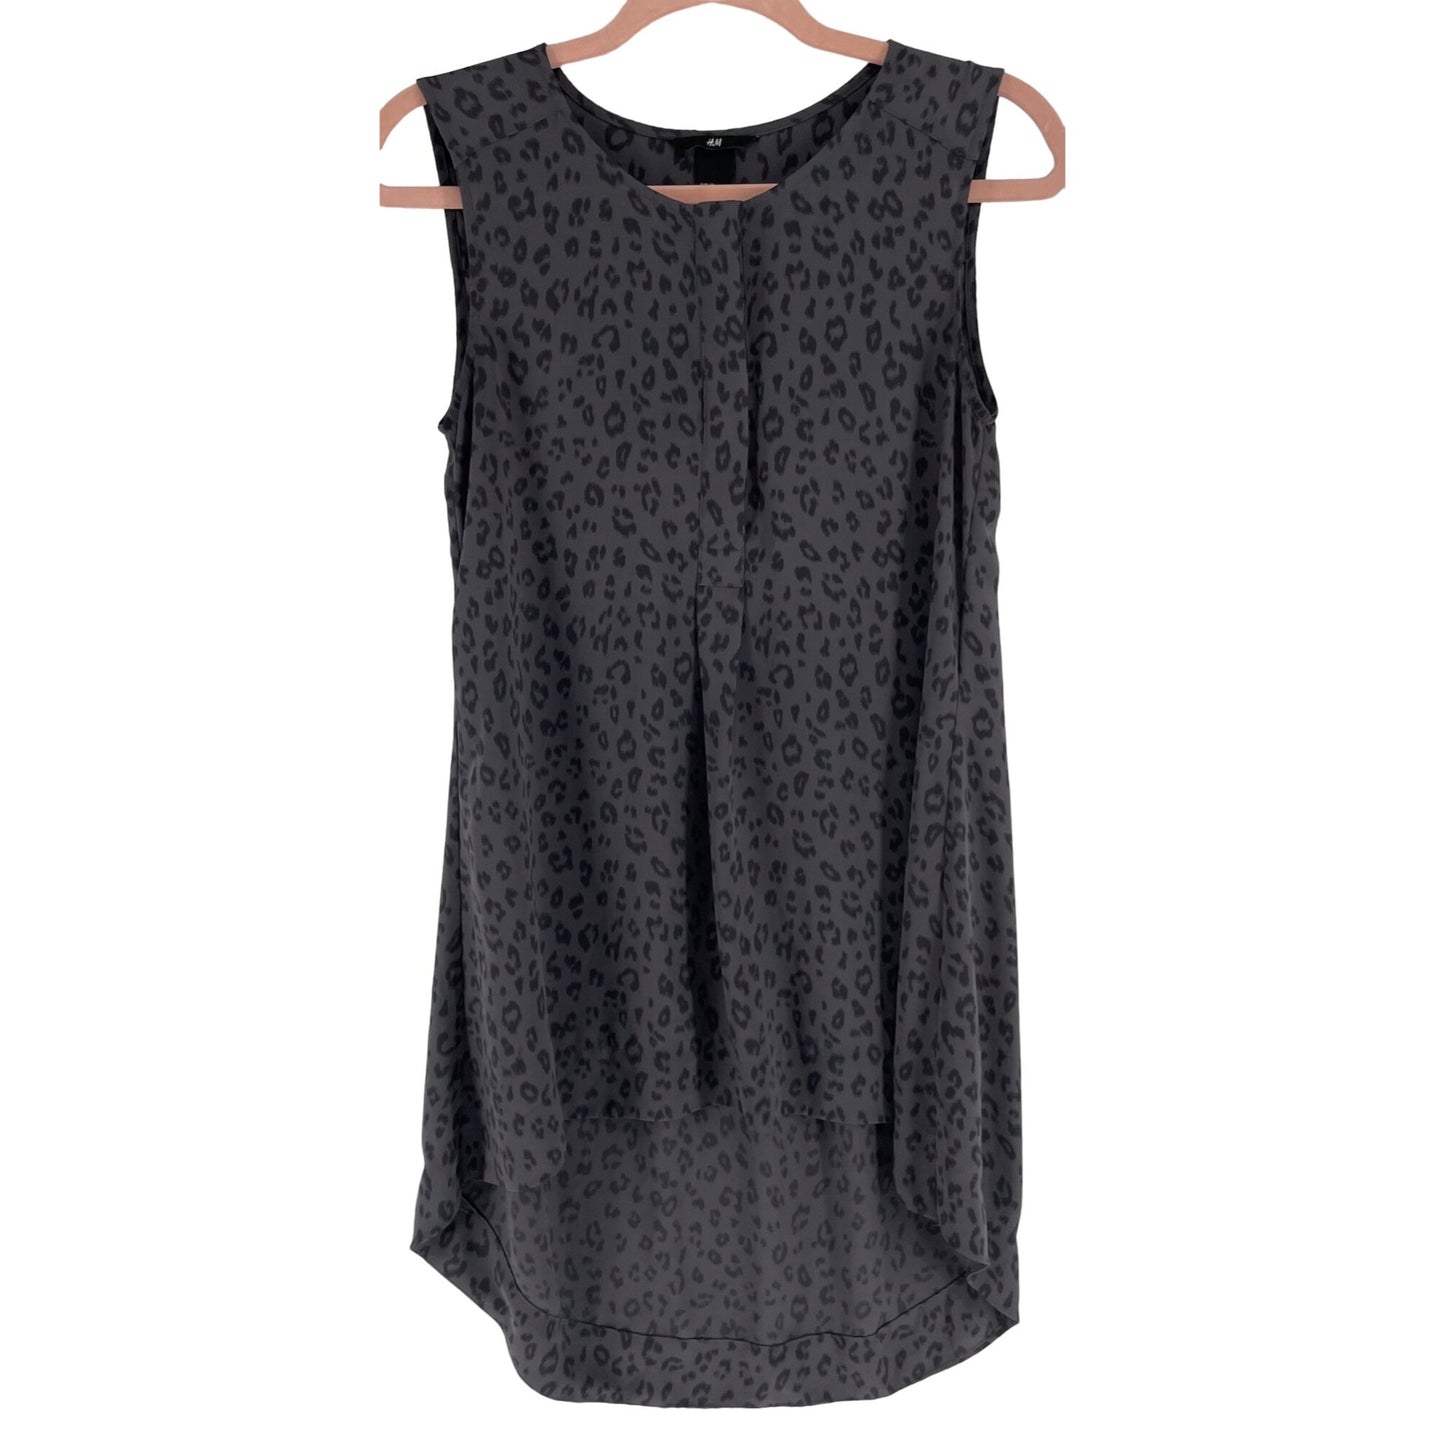 H&M Women''s Size 4 Grey Leopard Print Long Sleeveless Top